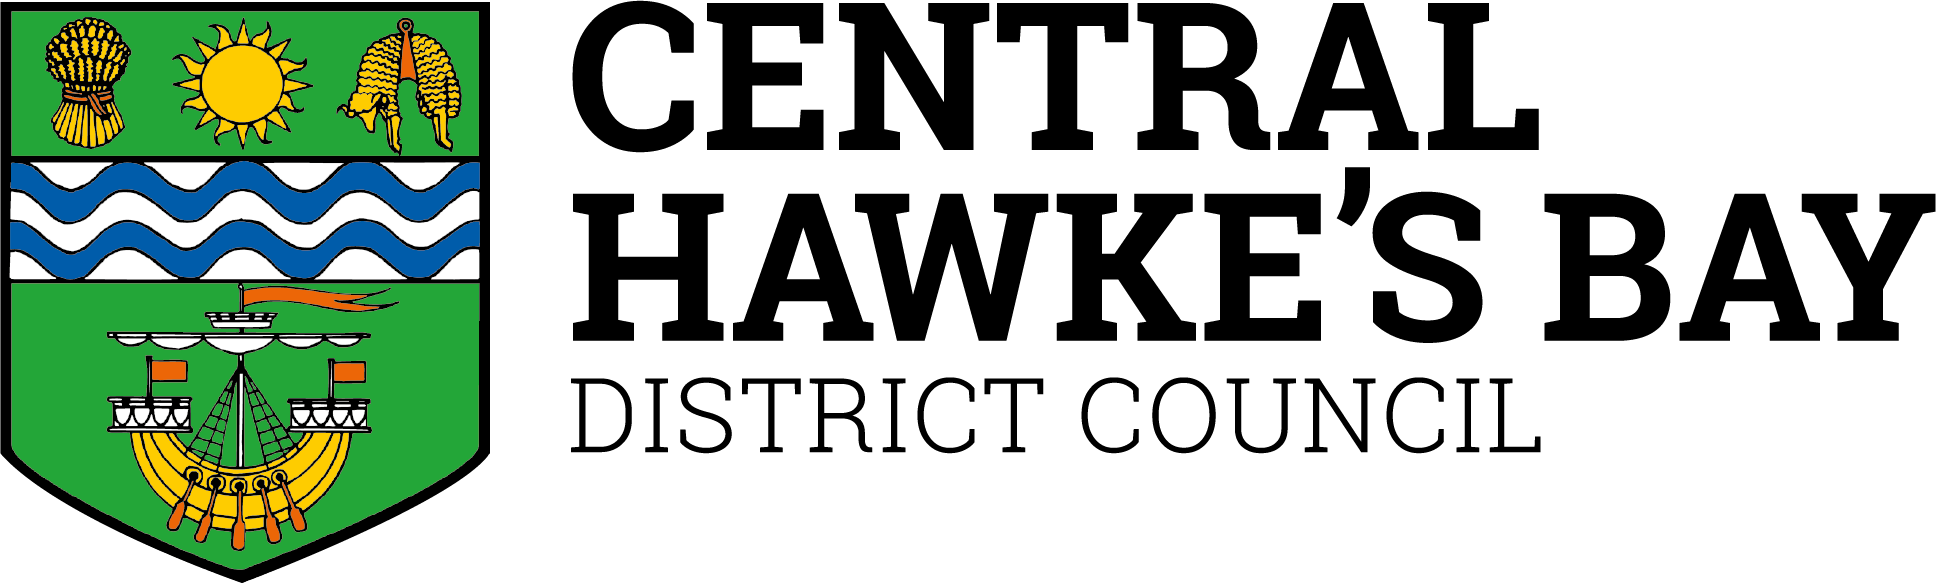 central-hawkes-bay-logo